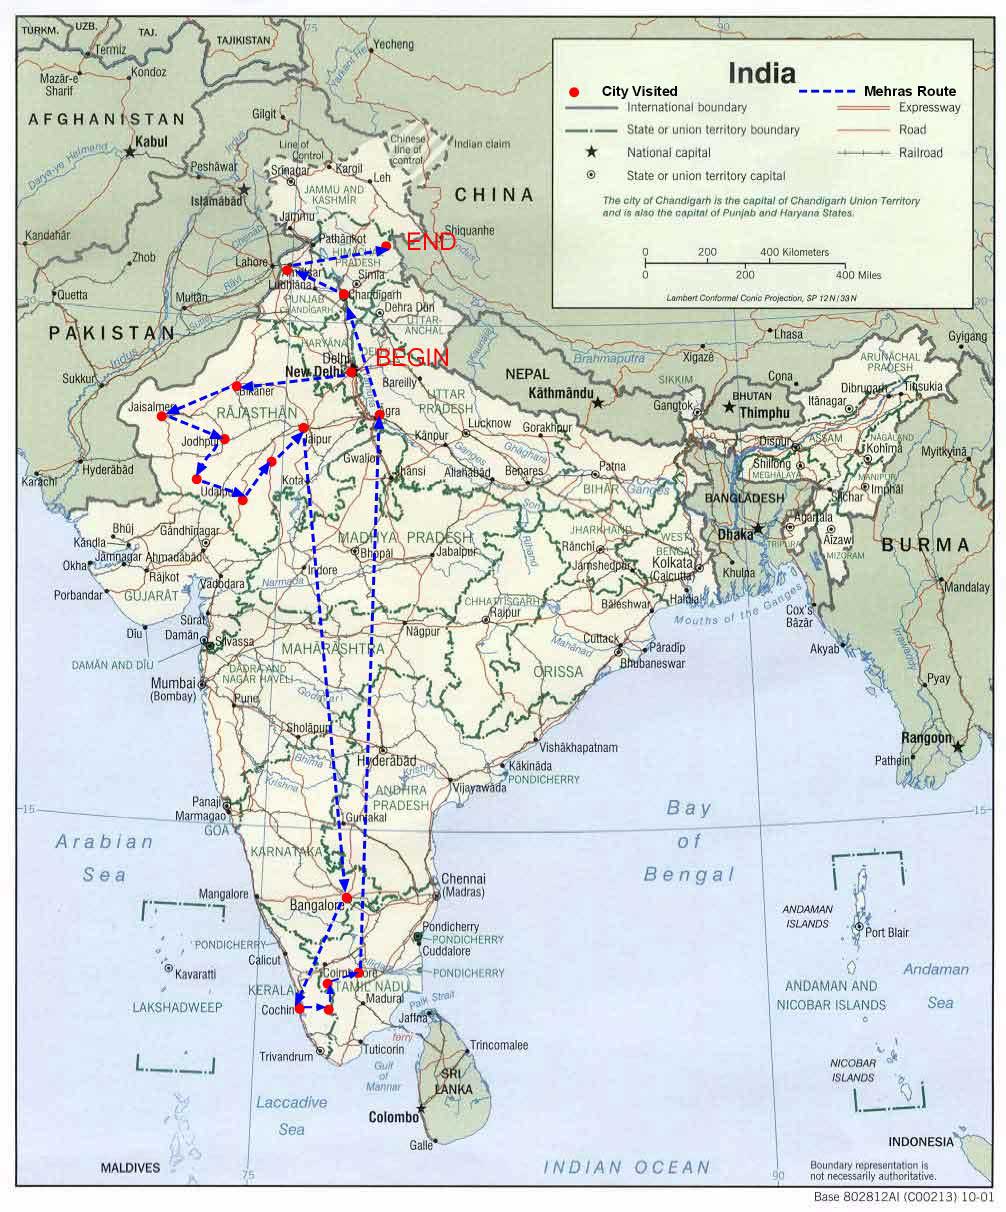 Mehras Indian Route